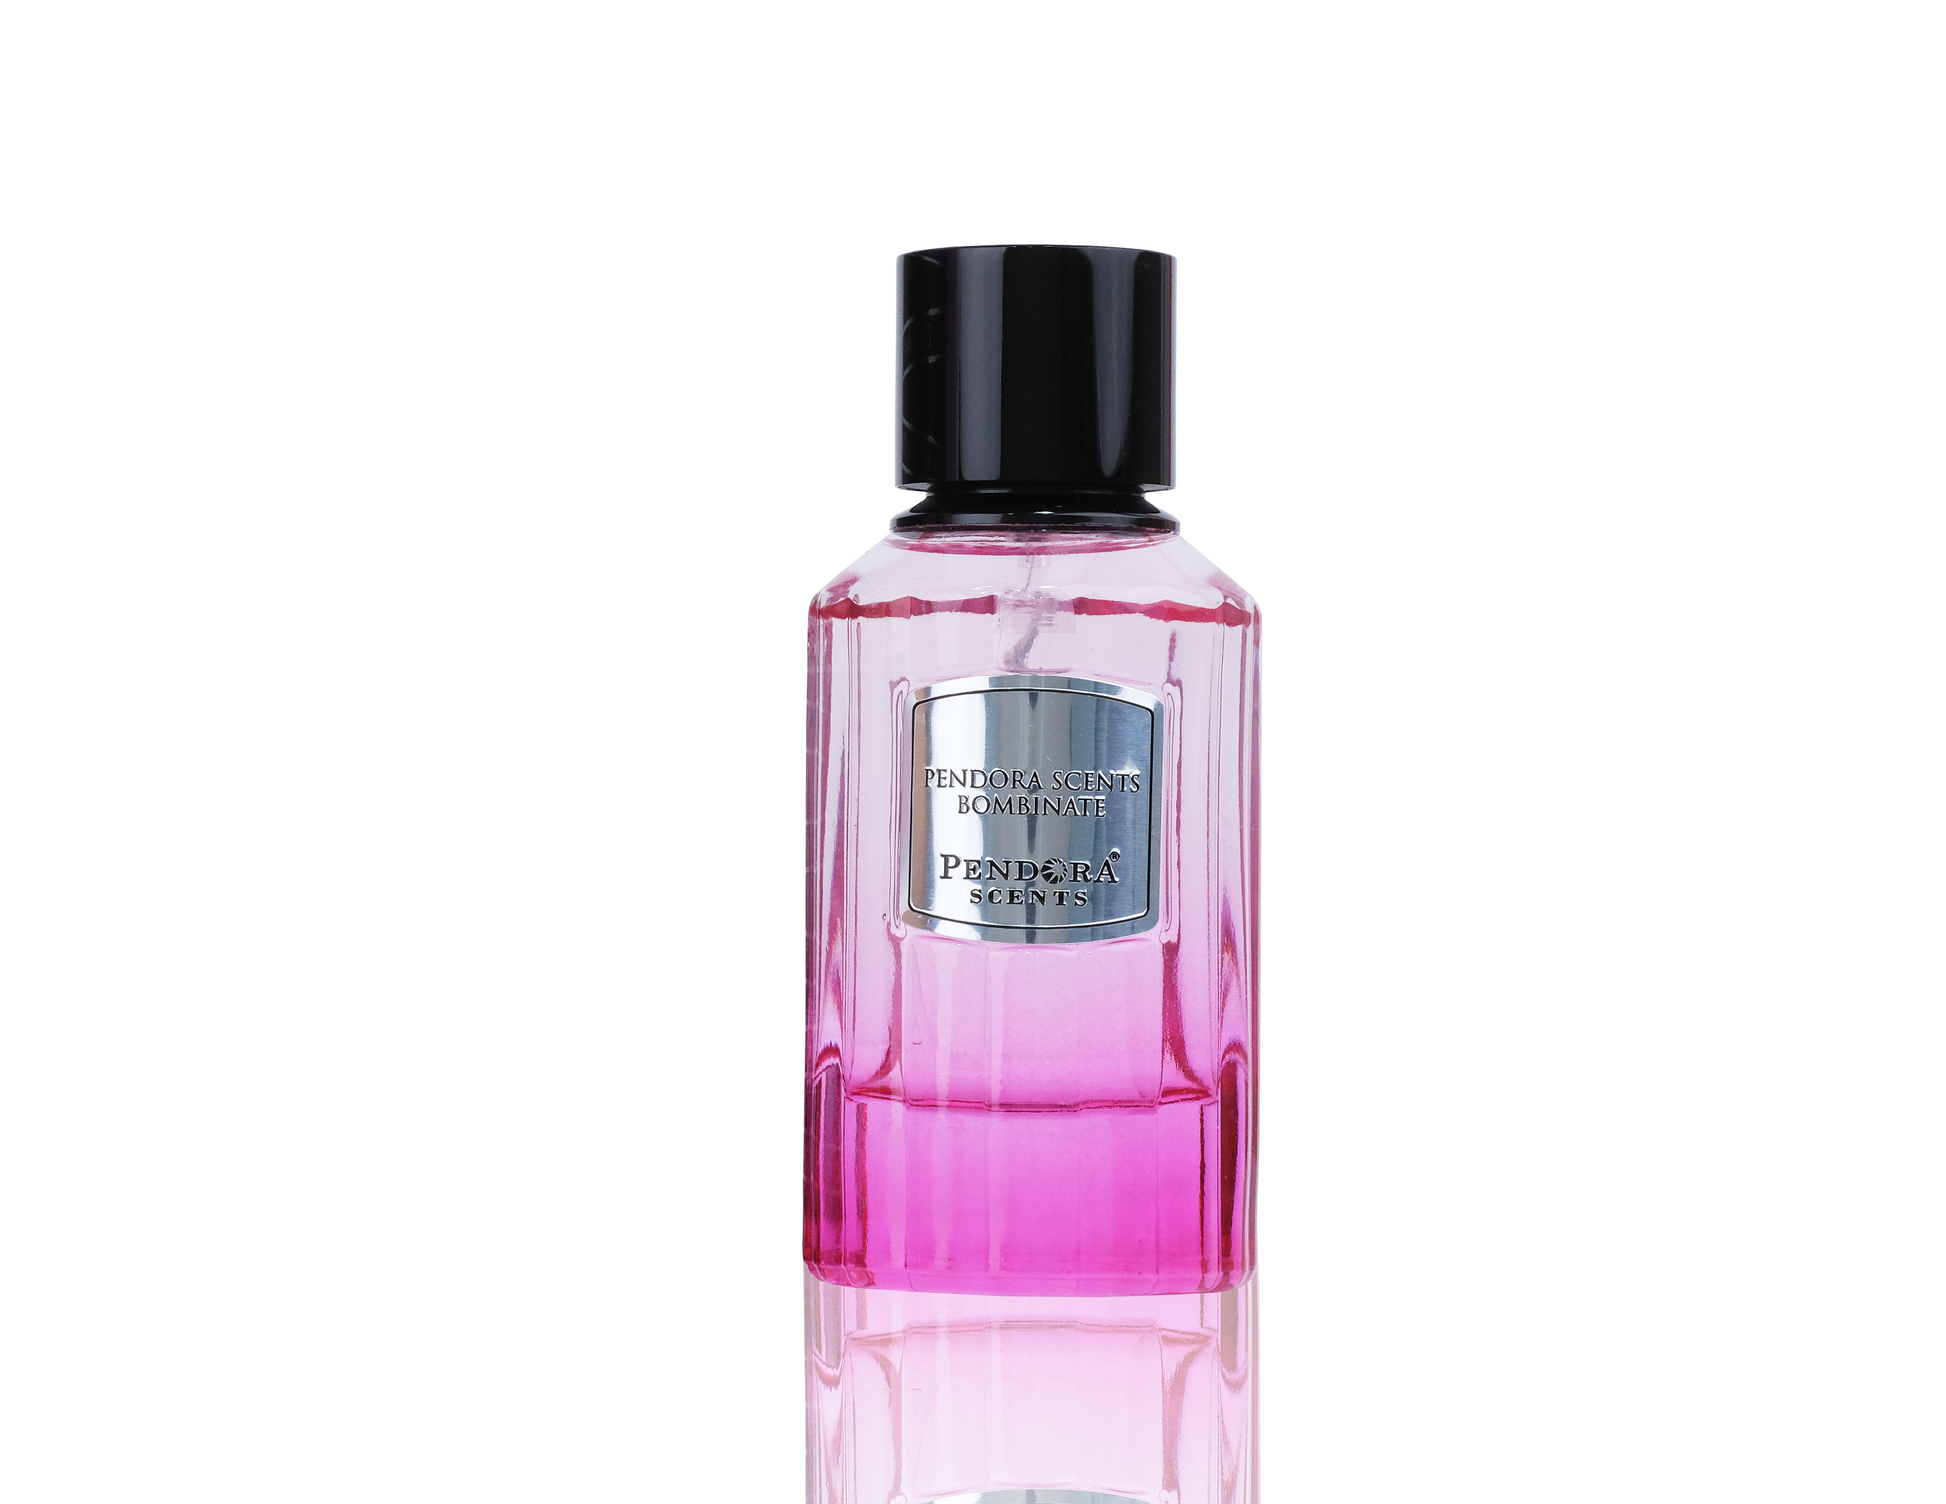 BOMBINATE 50ml - Aromatic floral Fragrance for Women.